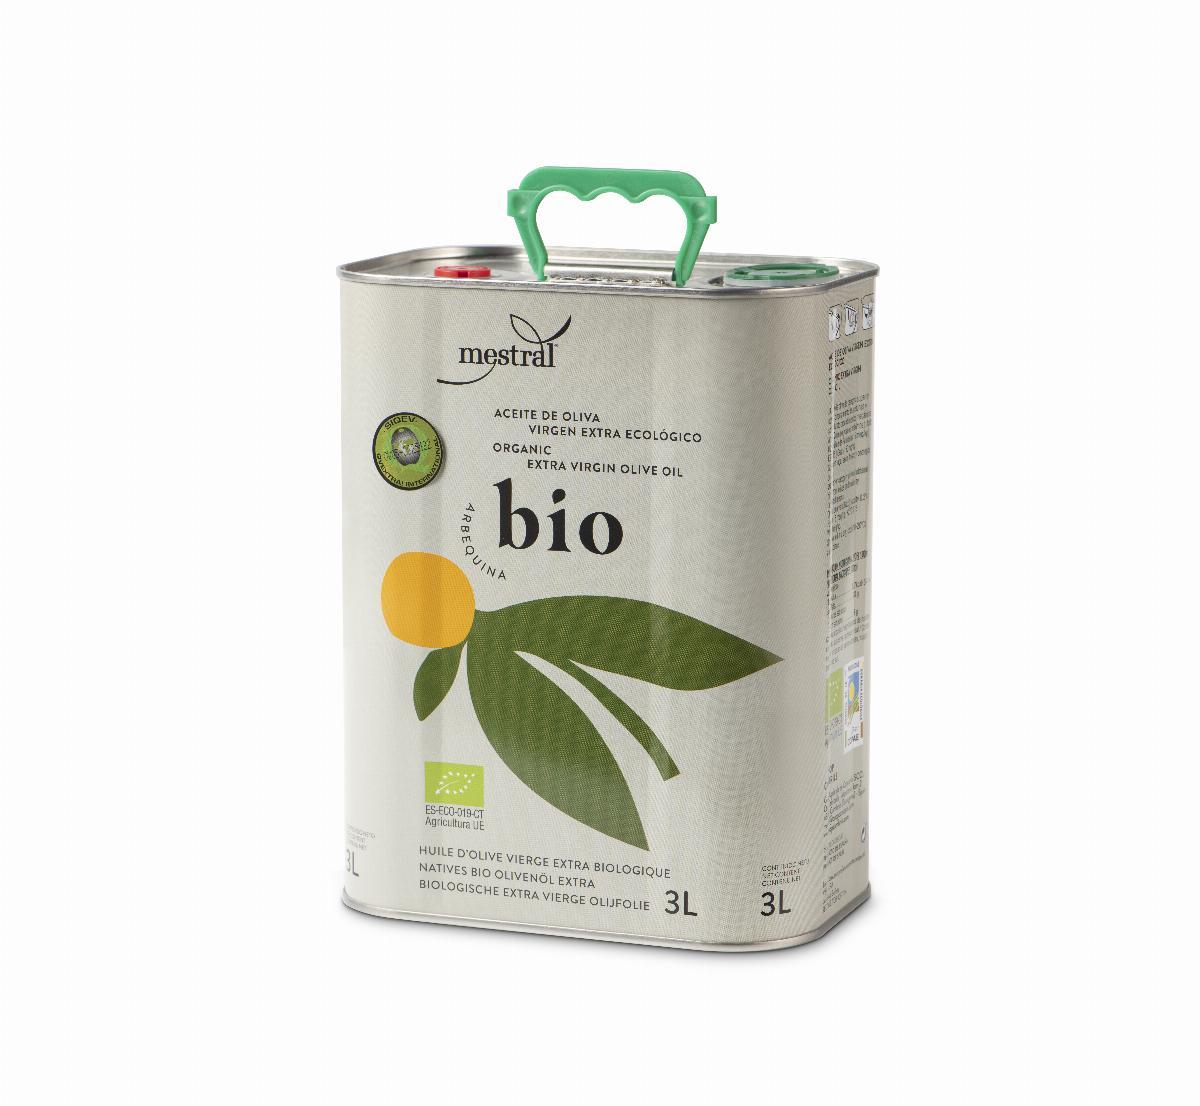 Olis i infusionats - Oli d'Oliva Verge Extra Mestral BIO agric. ecológica llauna 3L 100% Arbequina - Mestral Cambrils